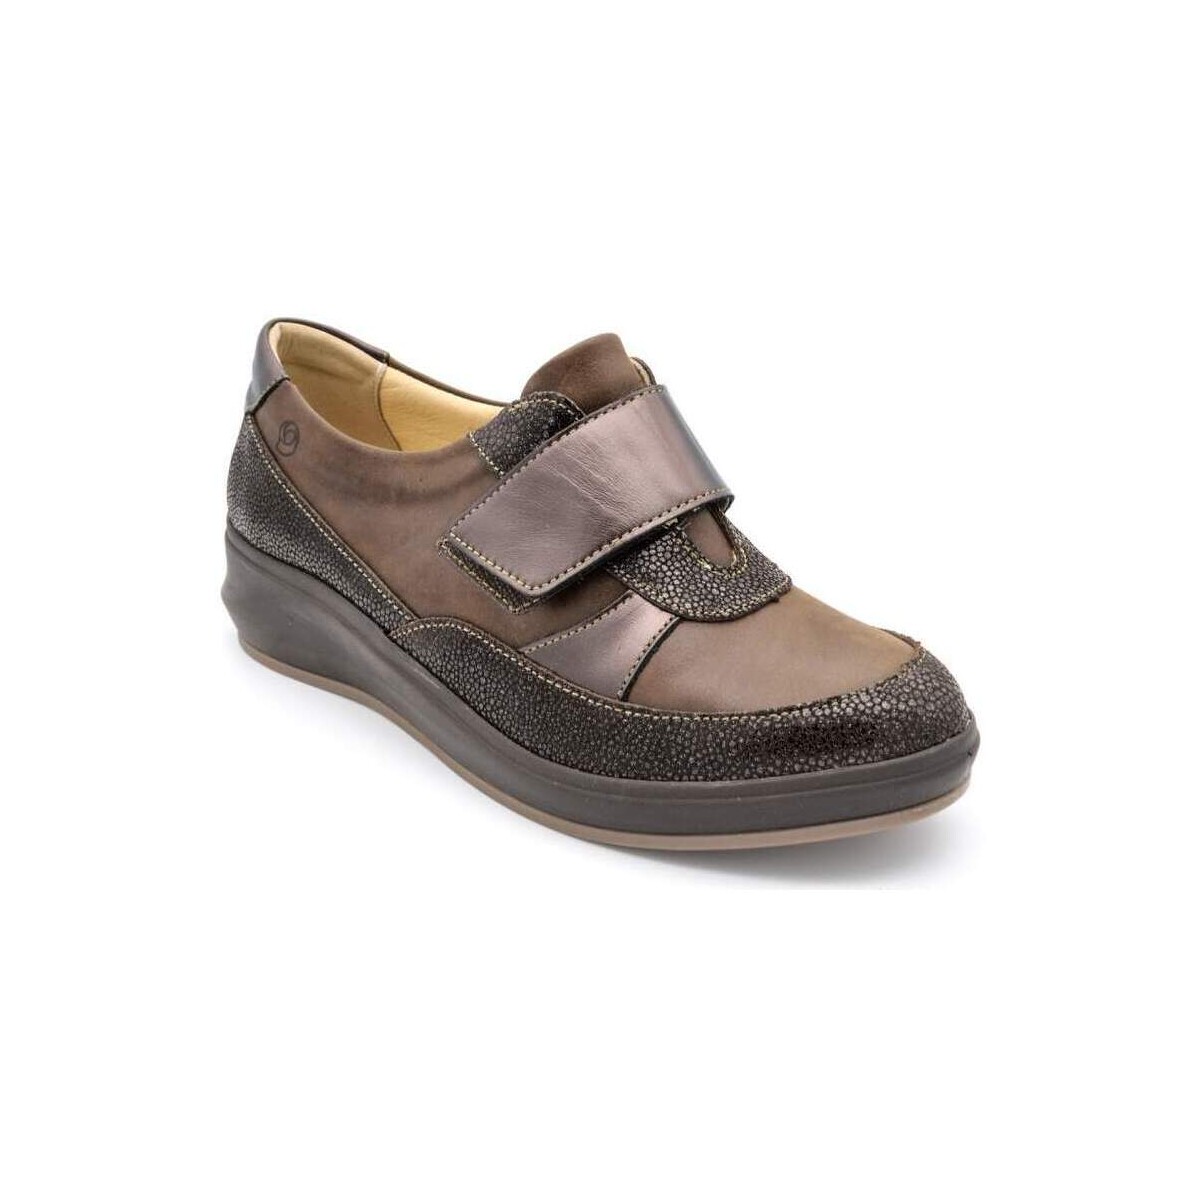 Schuhe Damen Derby-Schuhe & Richelieu Suave 3416 Braun